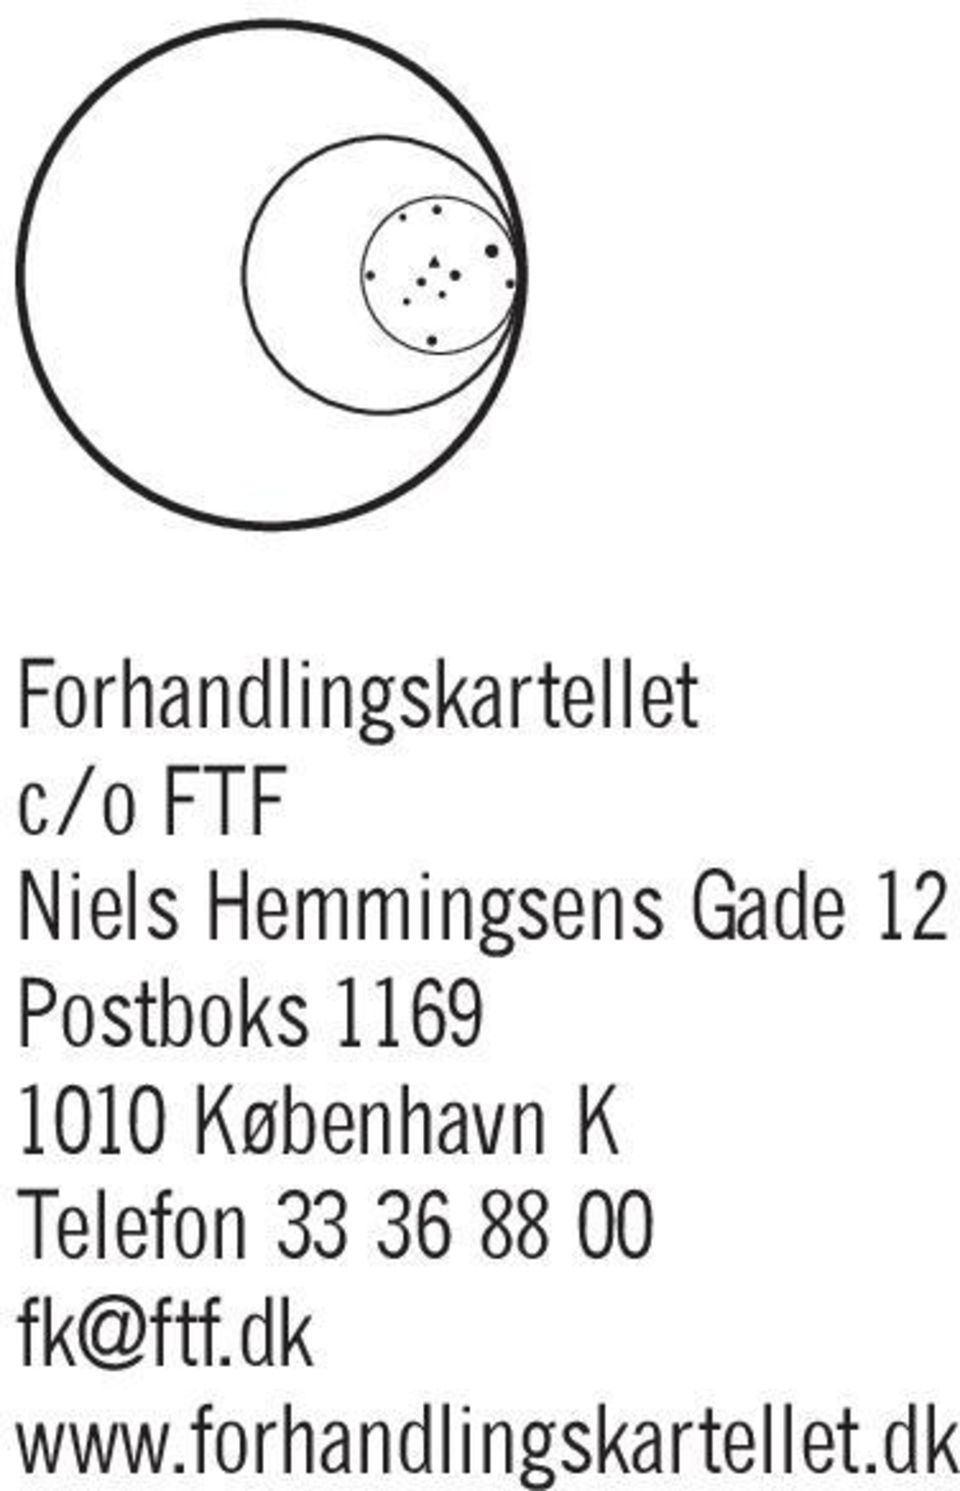 1010 København K Telefon 33 36 88 00